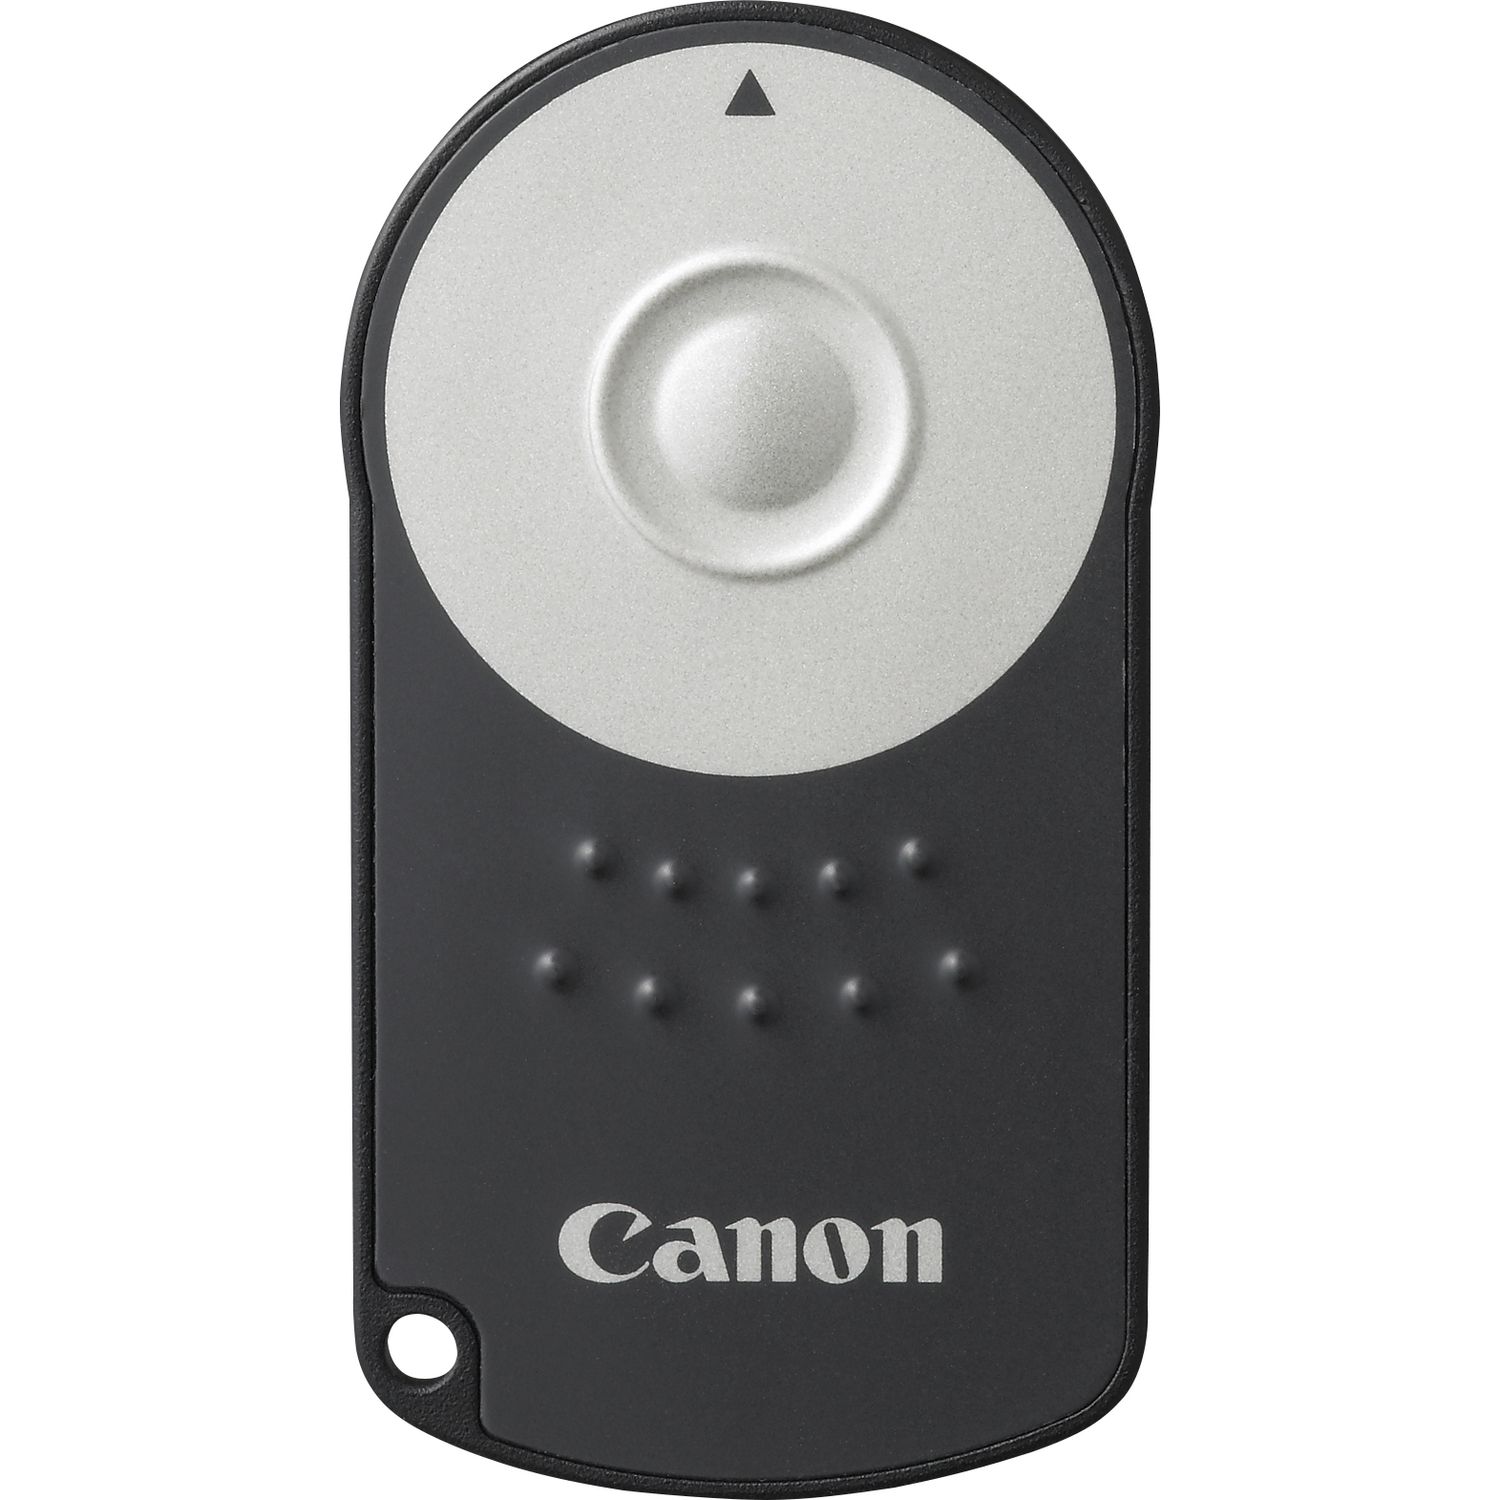 iRunzo RC-6 Shutter Release Remote Control Wireless Timer for Canon EOS 5D Mark II III EOS 7D 550D 500D 450D 60D 650D XT/XTi XSi T1i T2i Camera Accessories 